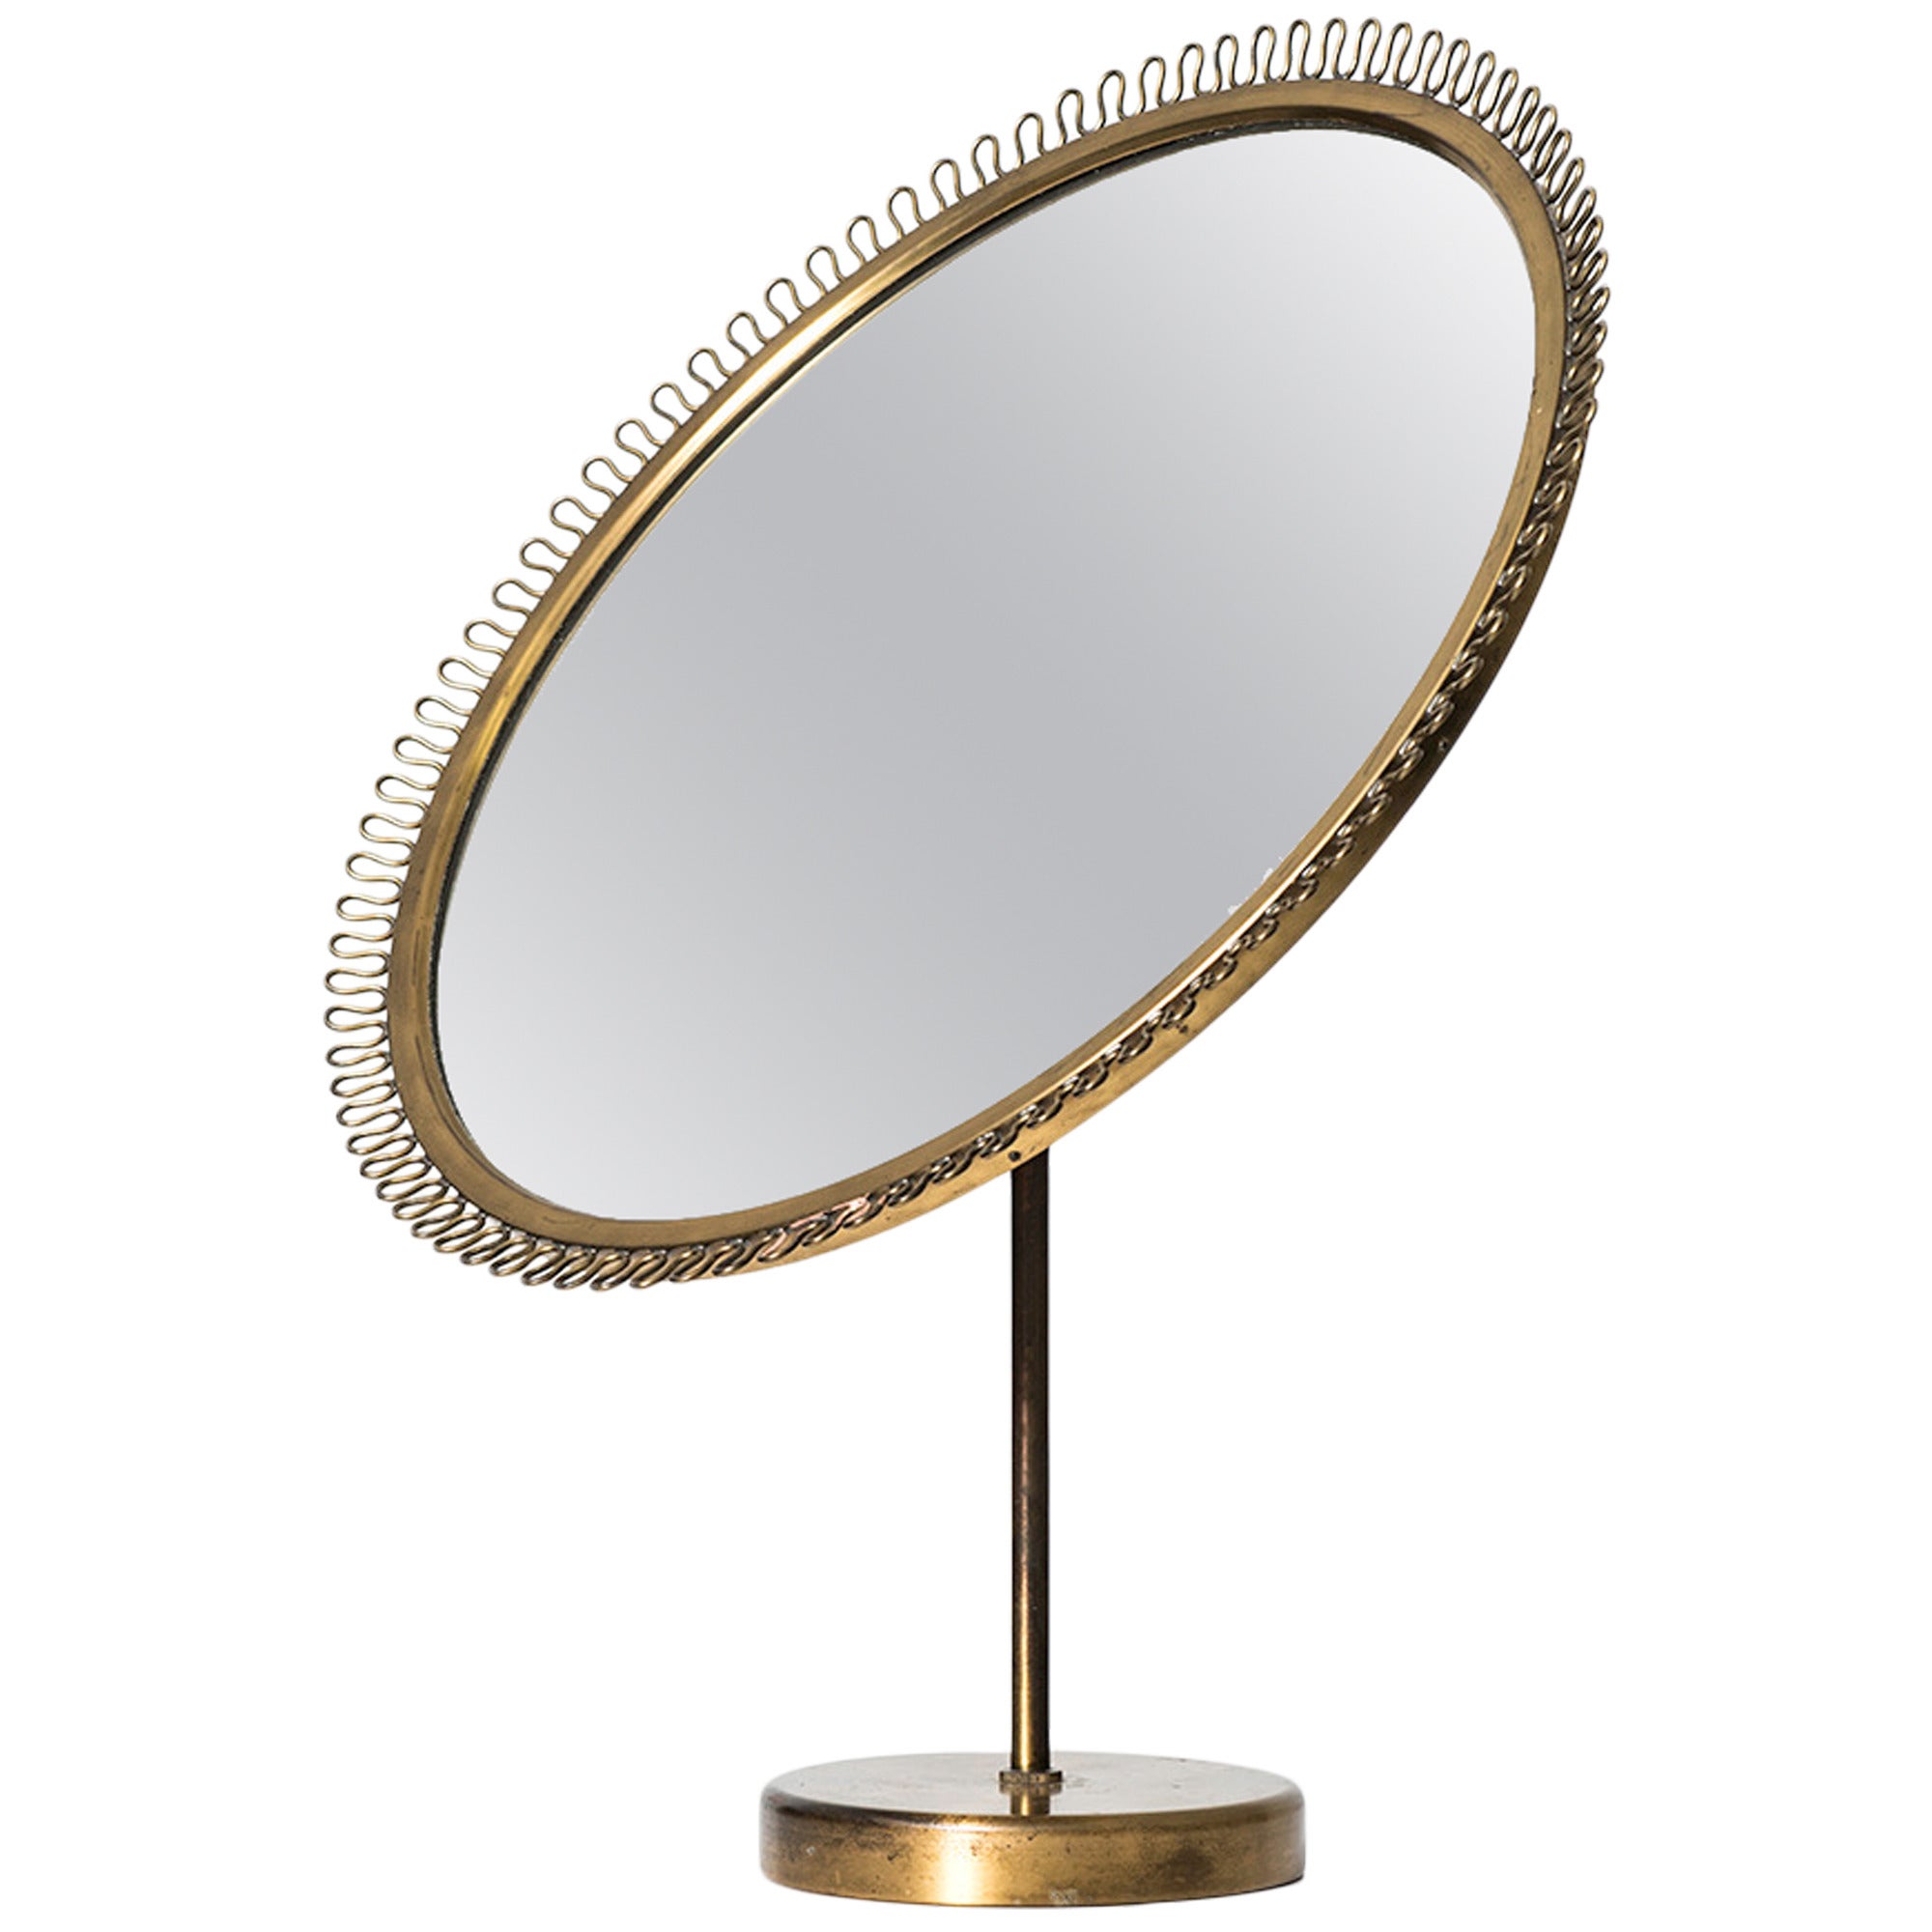 Josef Frank Table Mirror Produced by Svenskt Tenn in Sweden